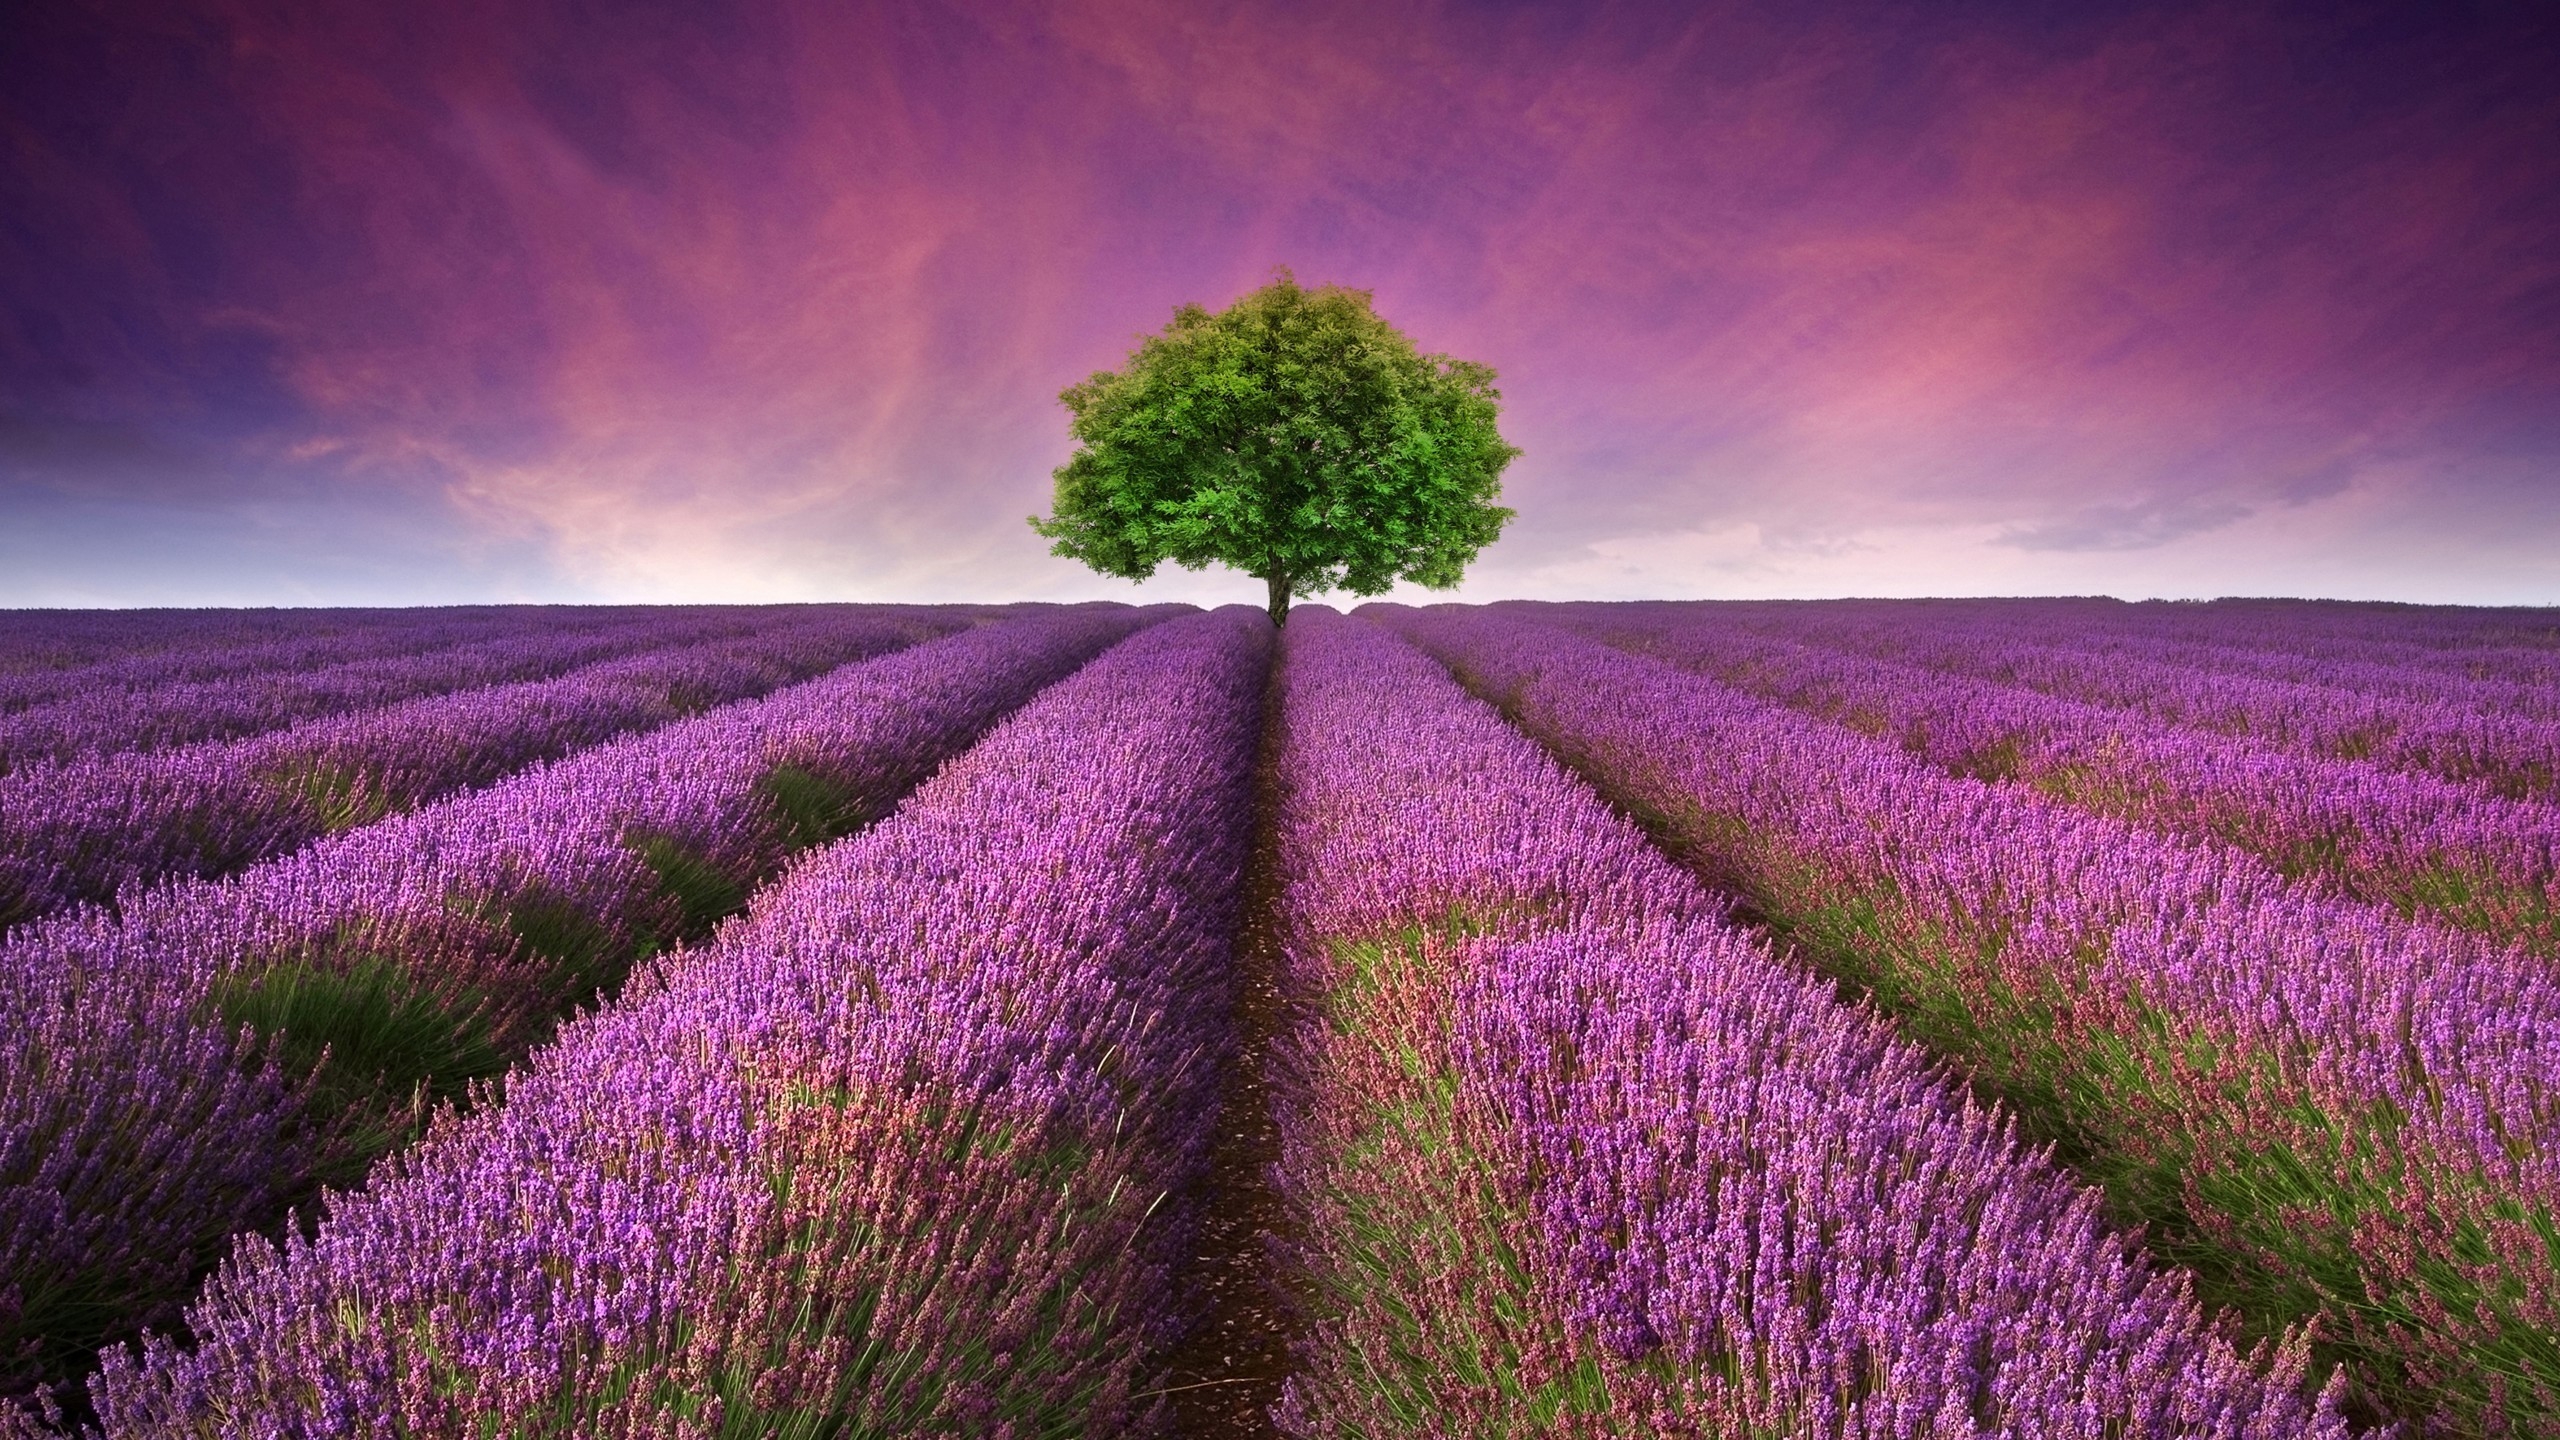 Lavender Field for 2560x1440 HDTV resolution